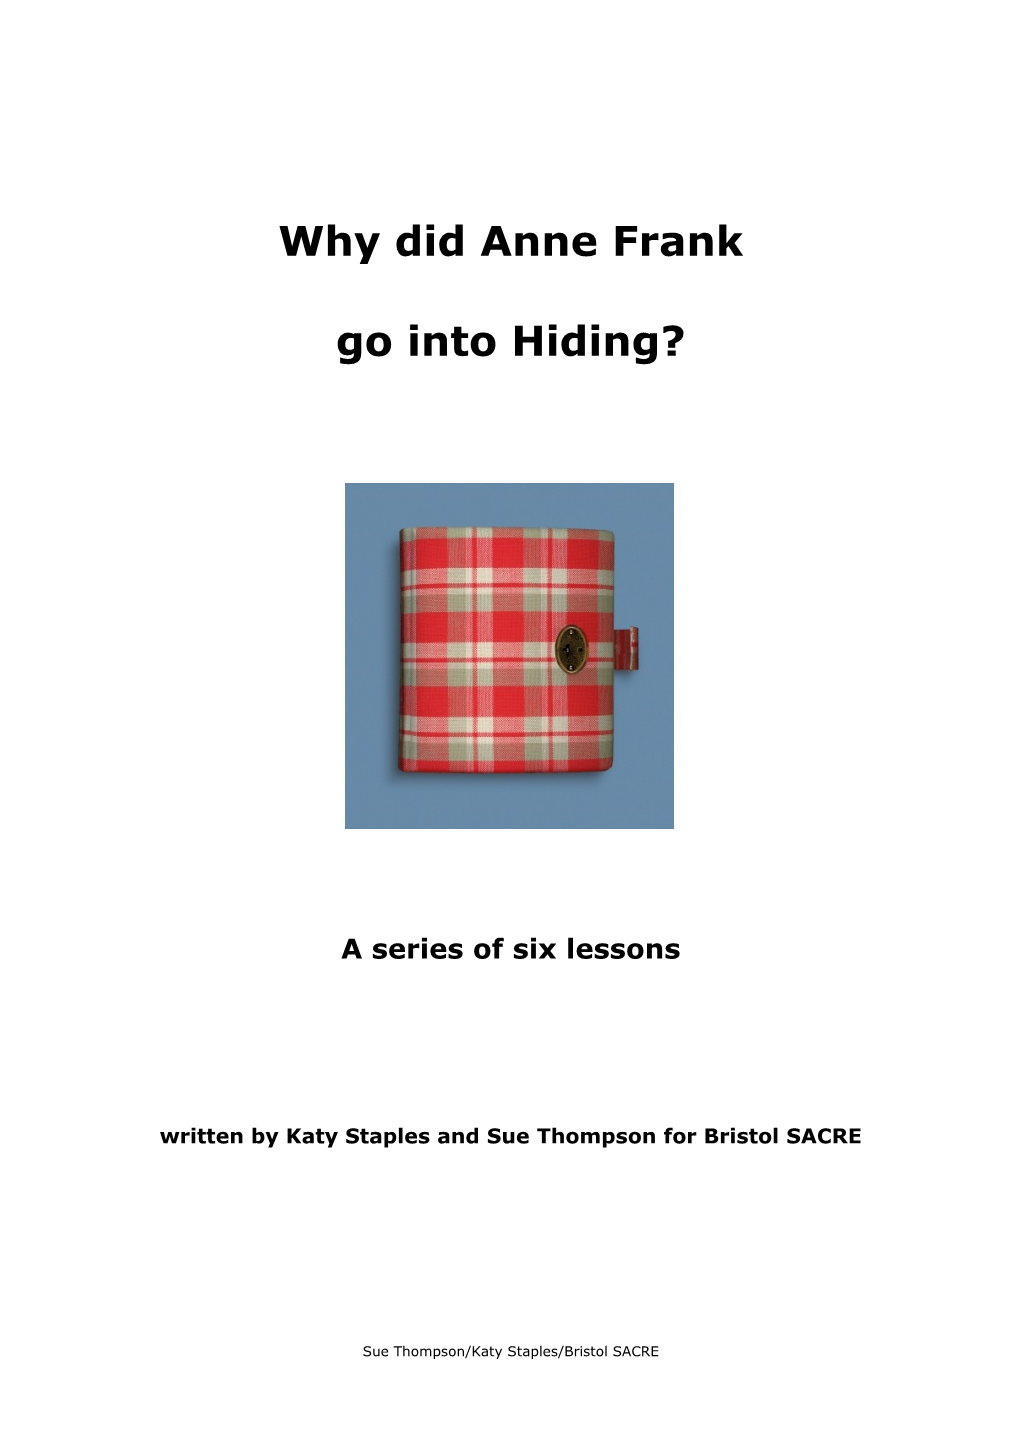 Why Did Anne Frank